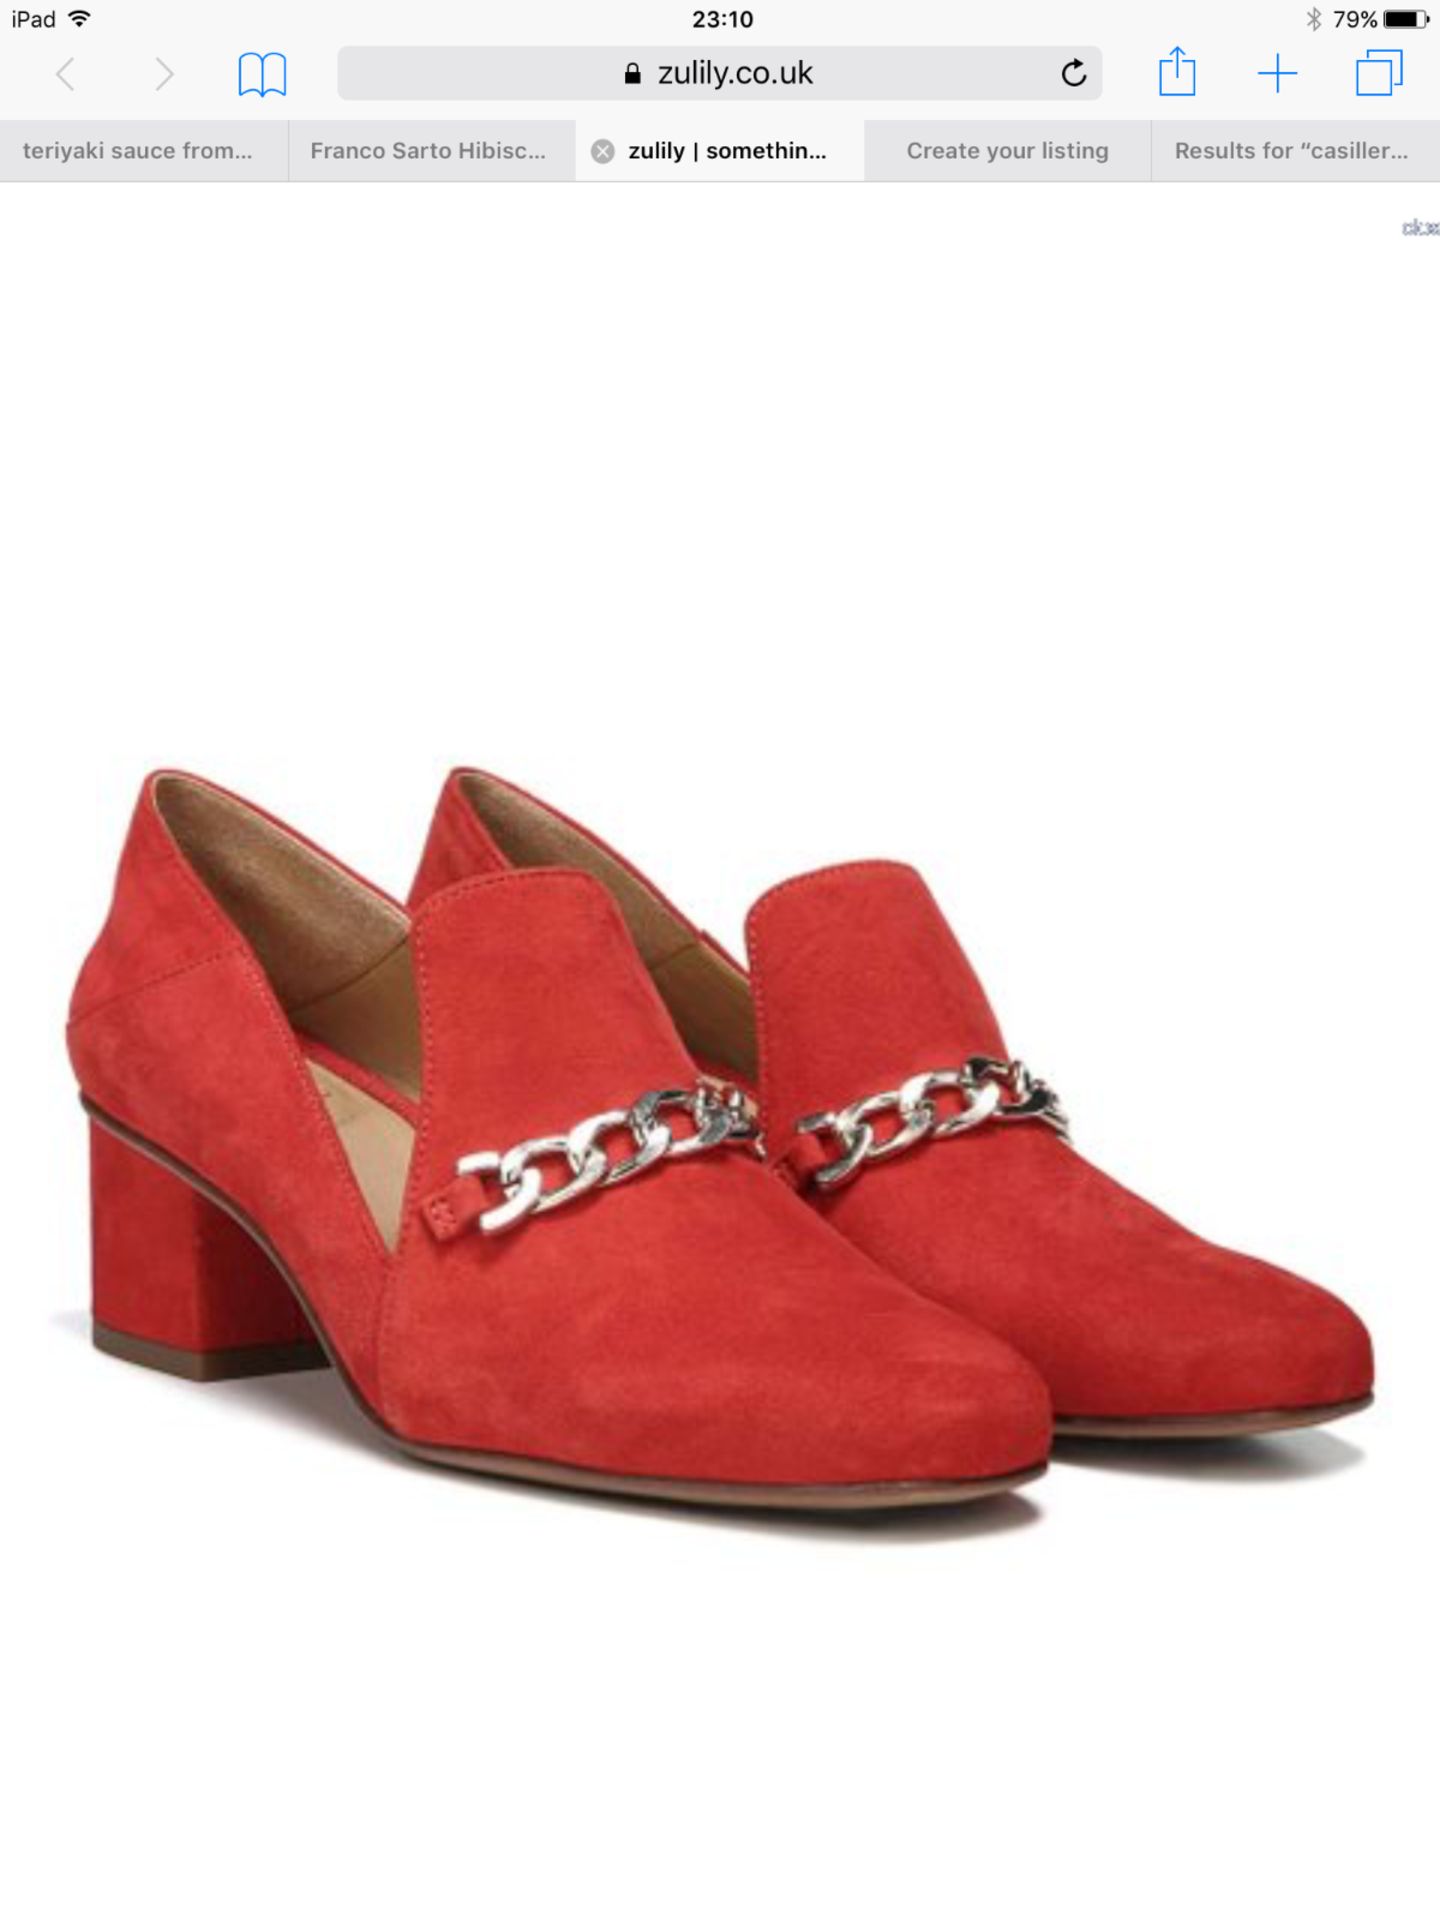 Franco Sarto Hibiscus Red Layola Shoe, Size Uk 5.5-6 (New With Box) [Ref: 55491910 I004]